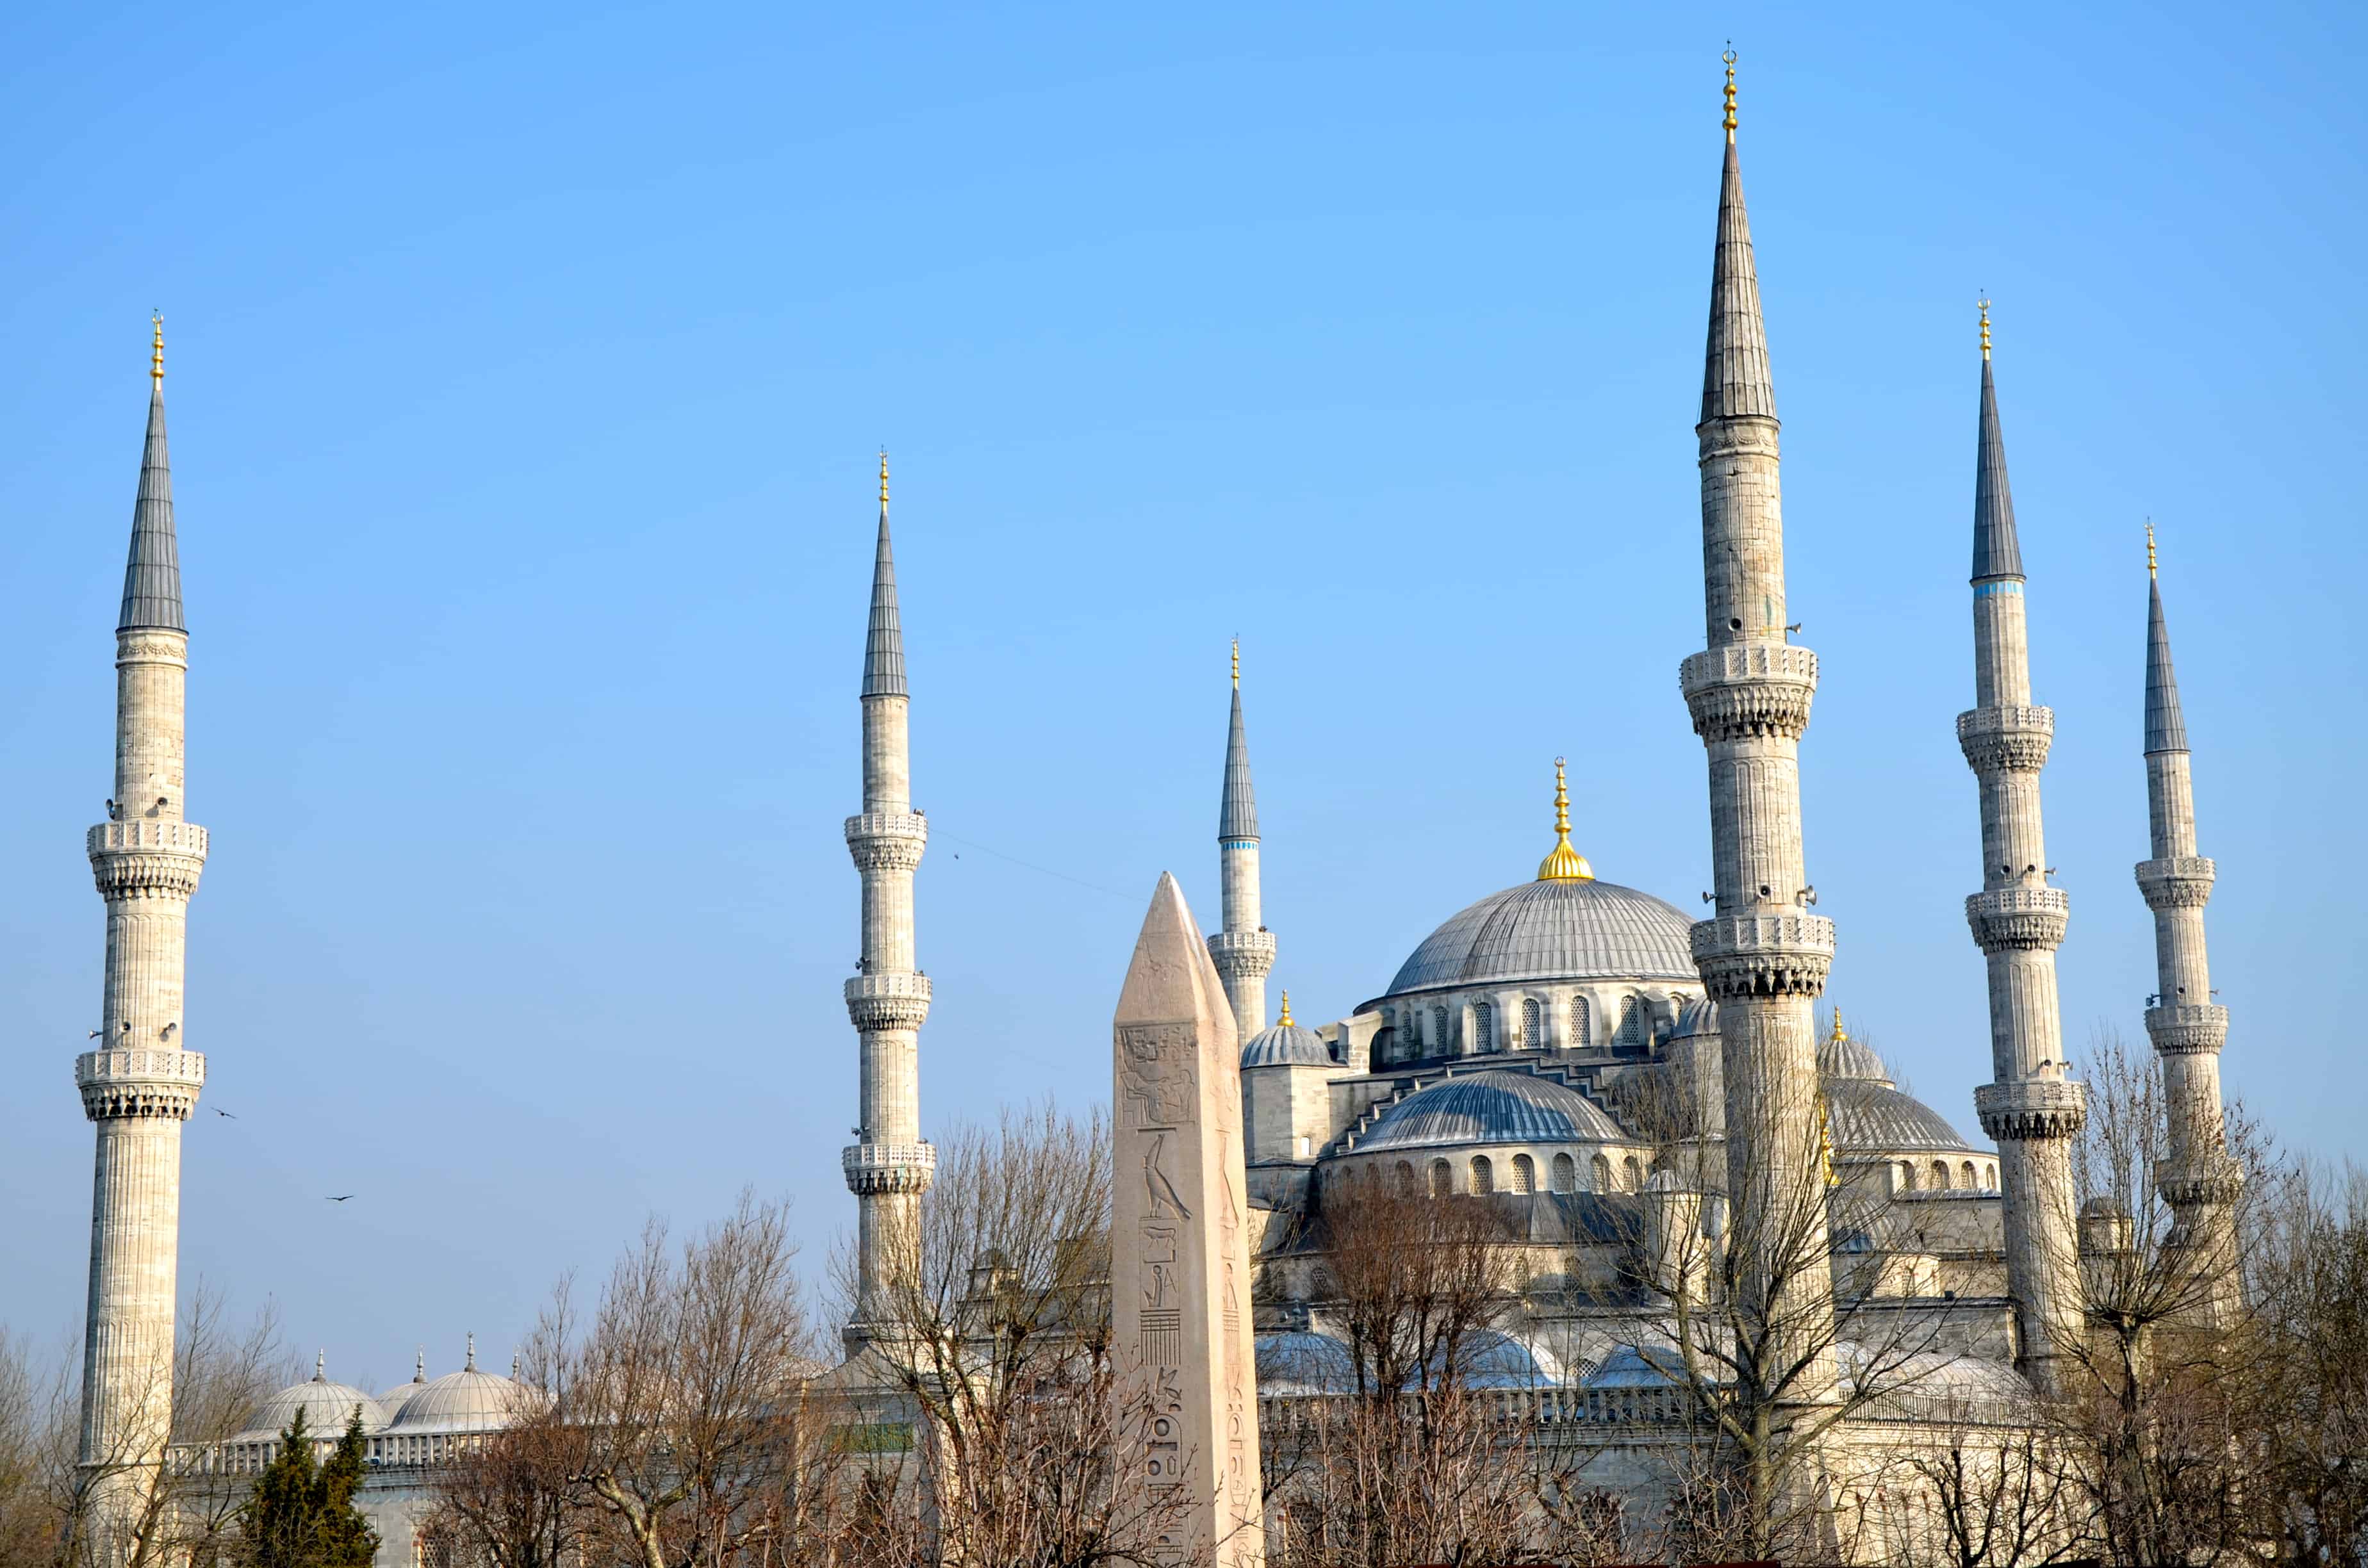 Sultan Ahmet Camii (Blue Mosque) in Fatih, Istanbul, Turkey